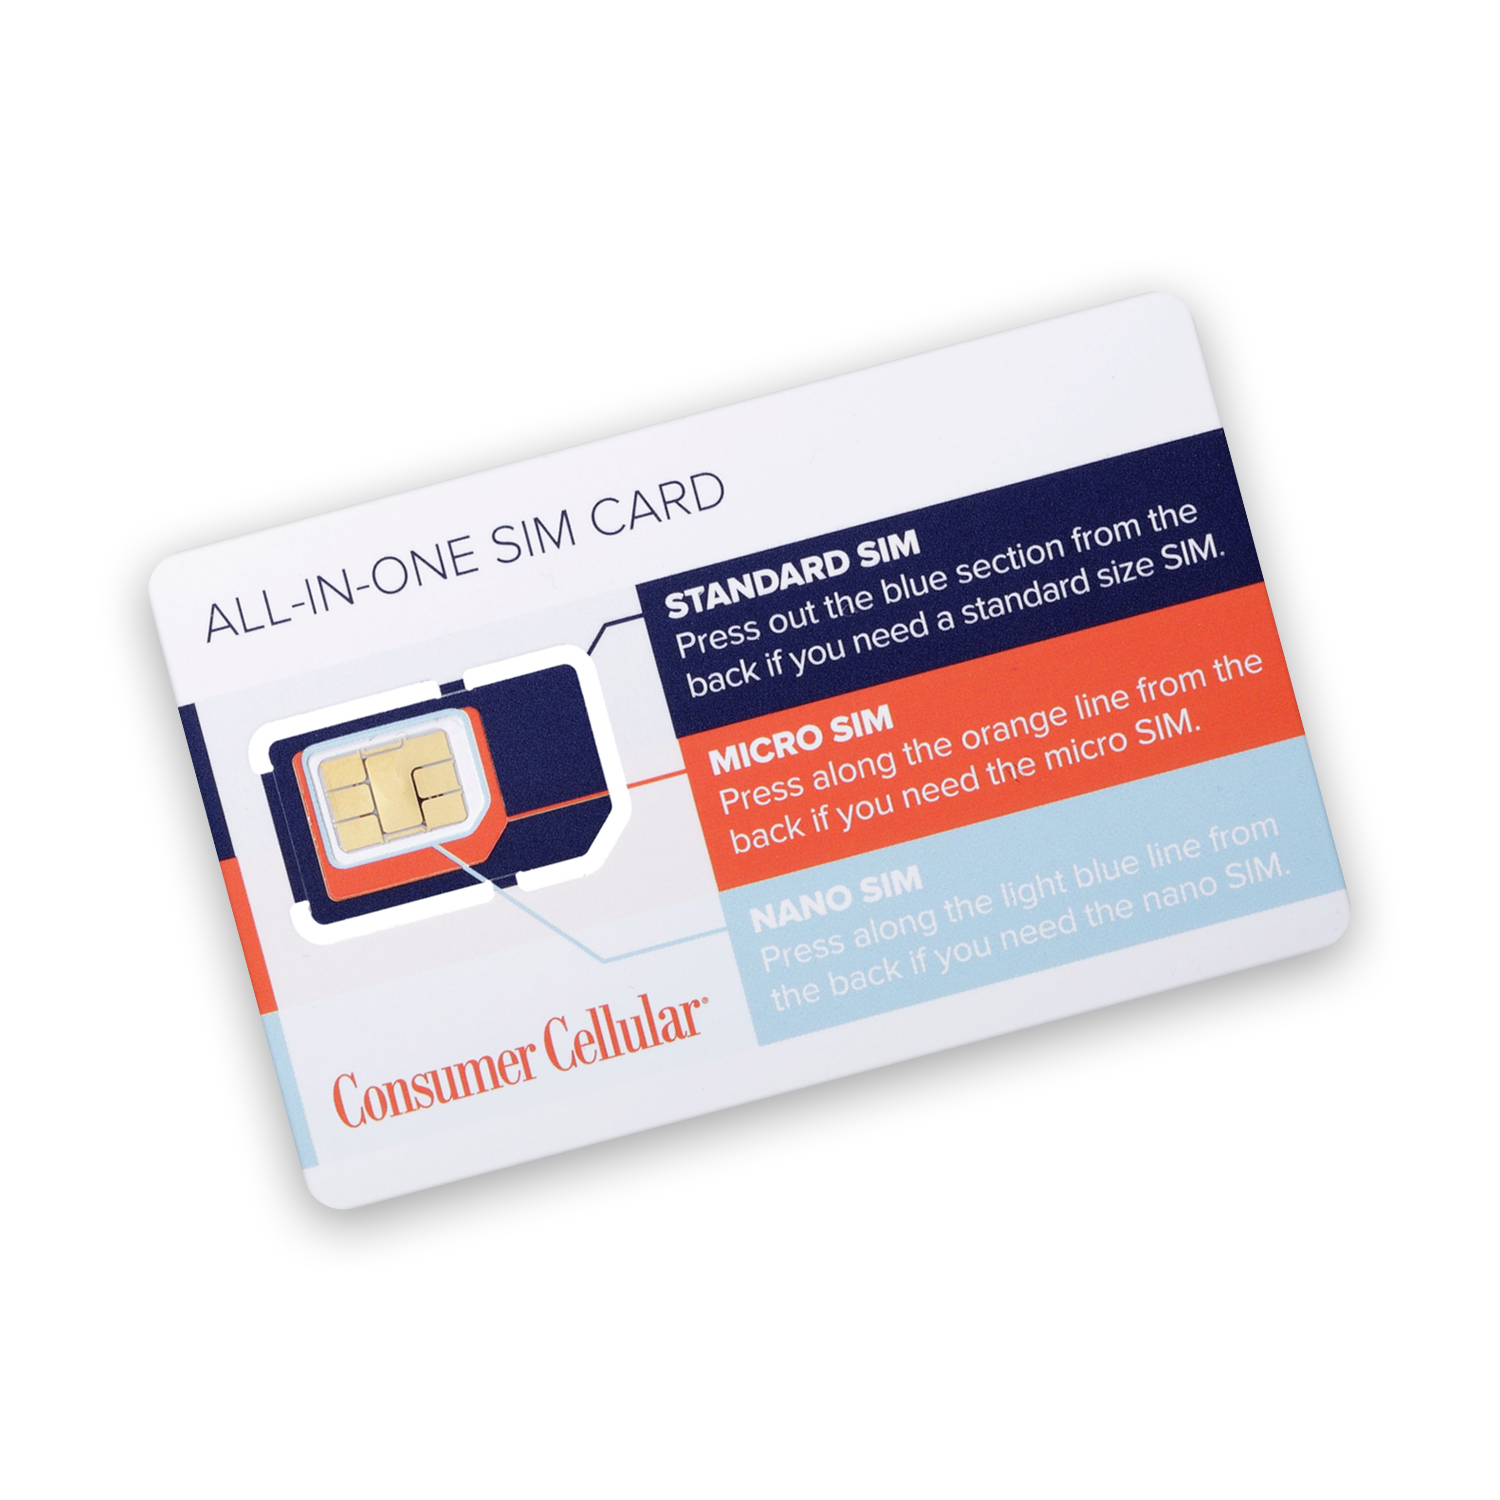 All-in-One SIM Card